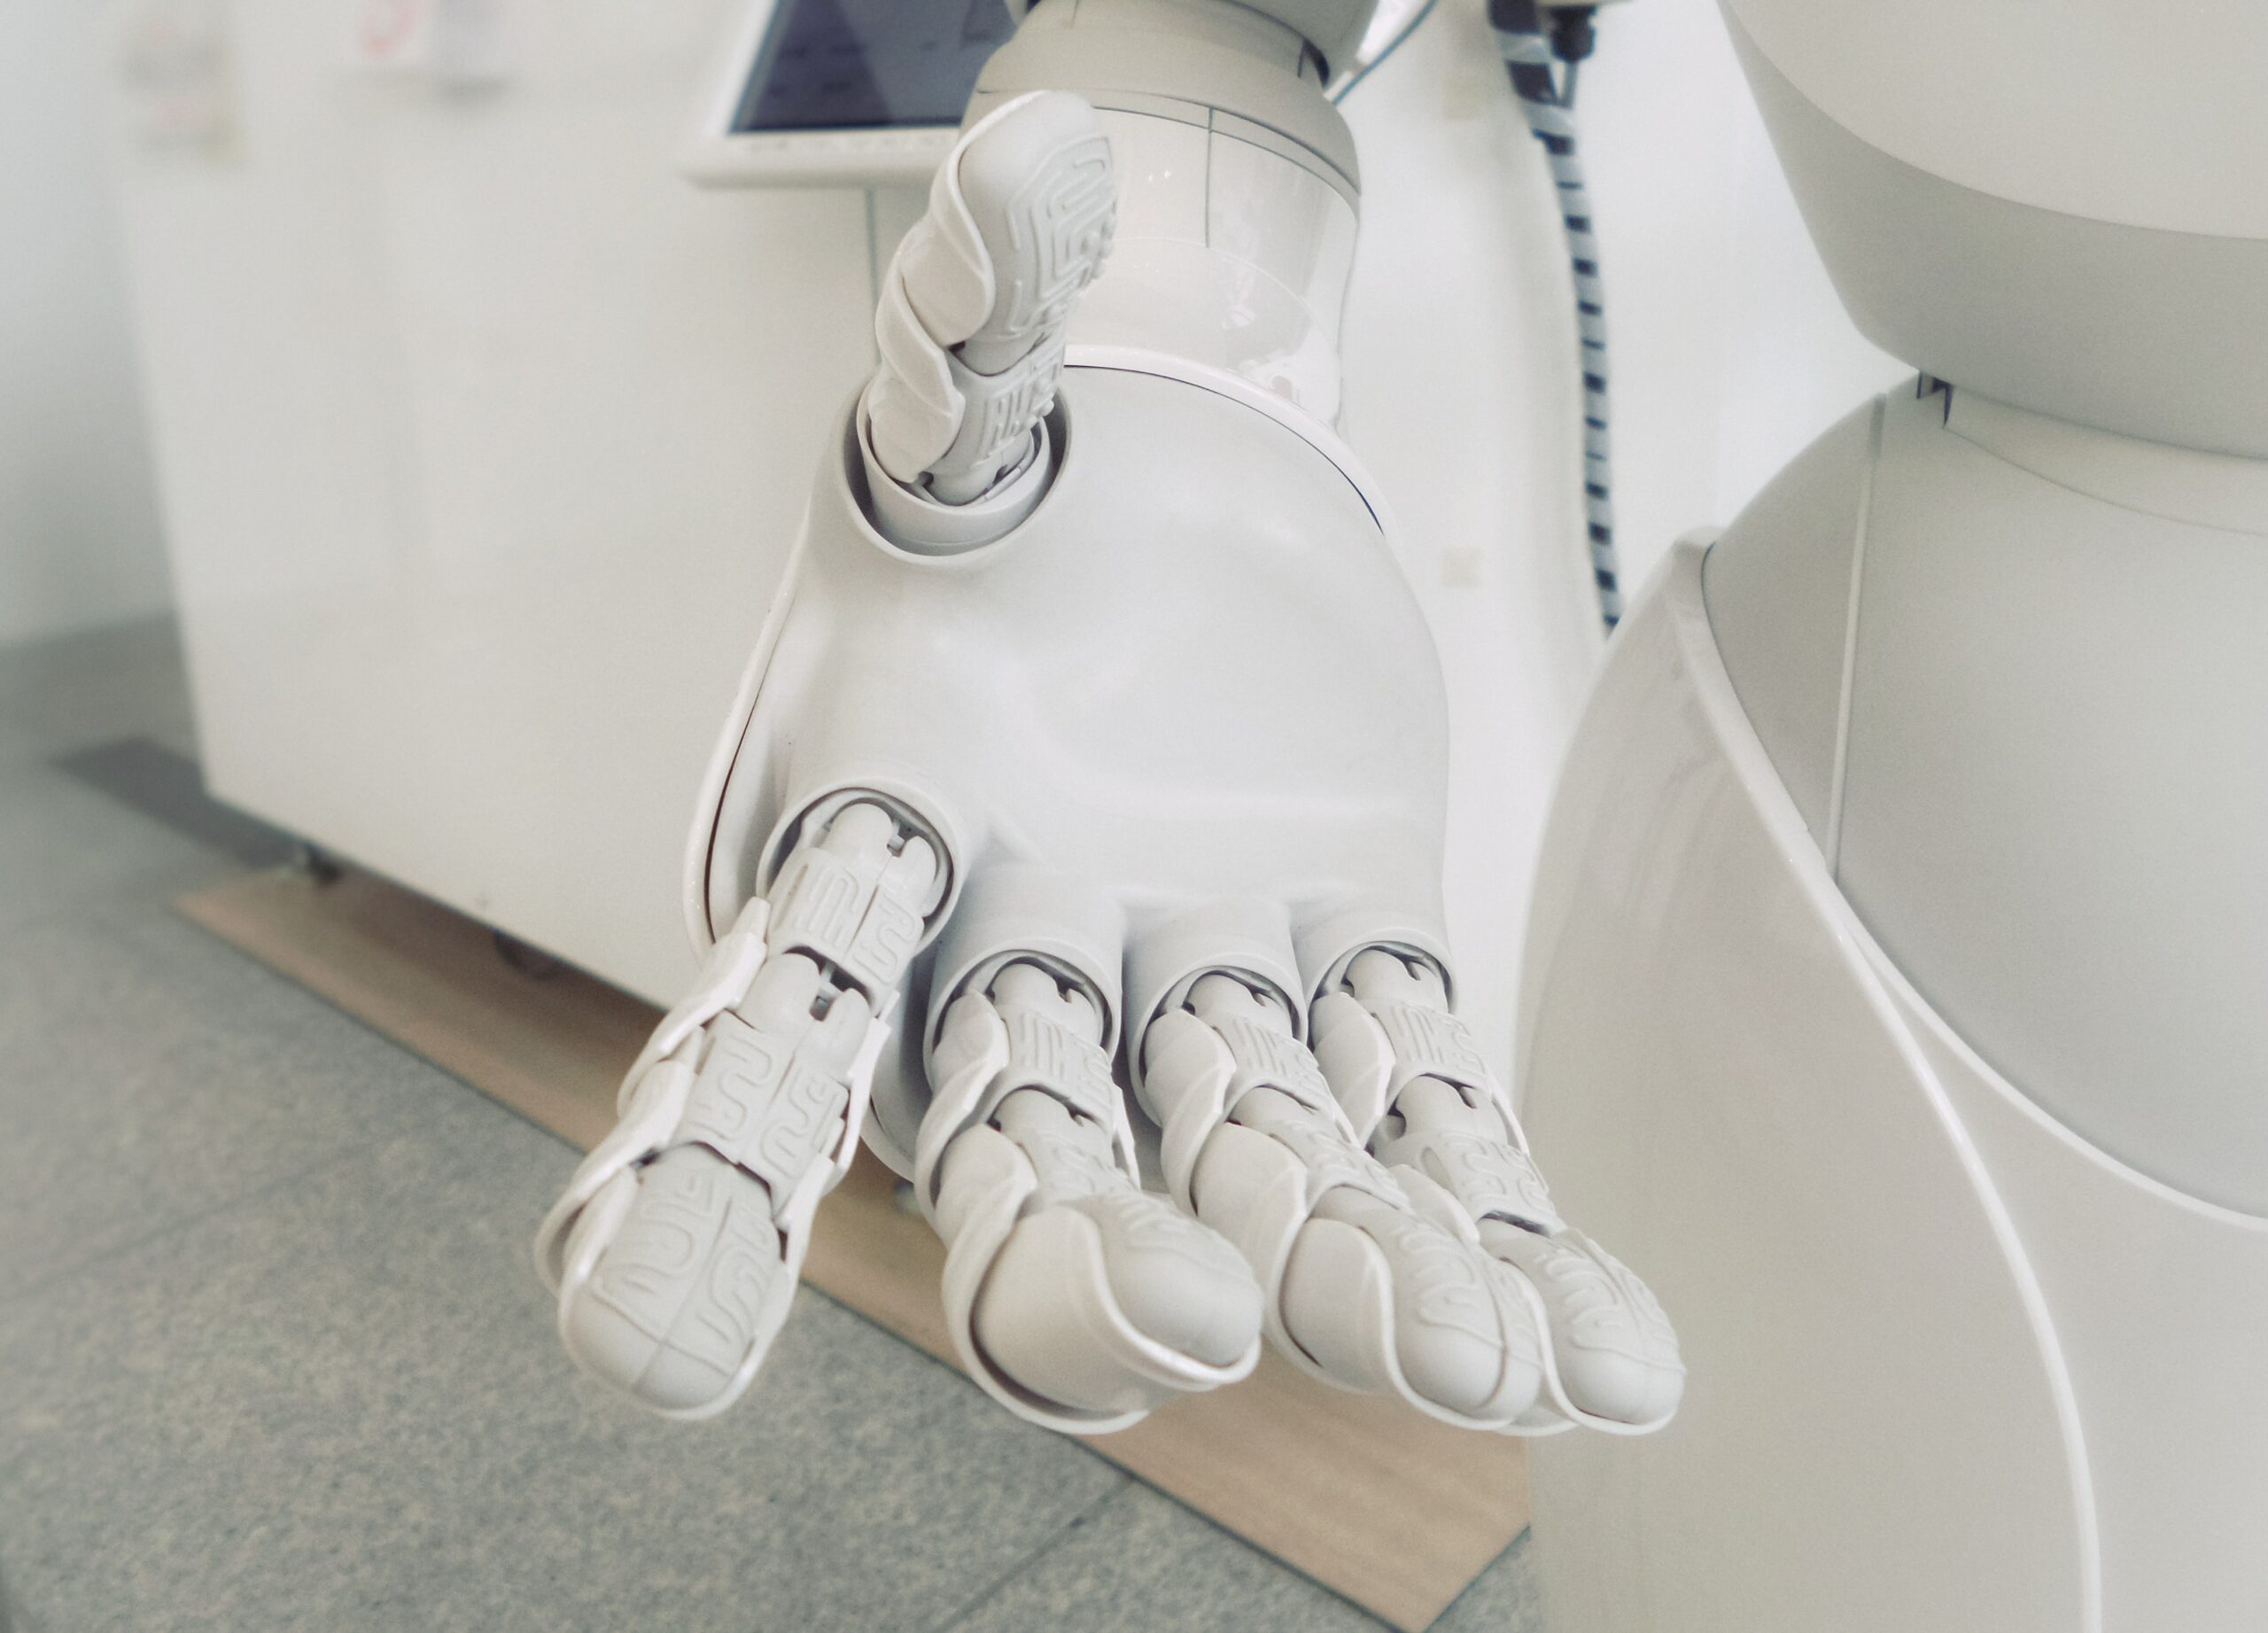 artificial intelligence robot reaching hand